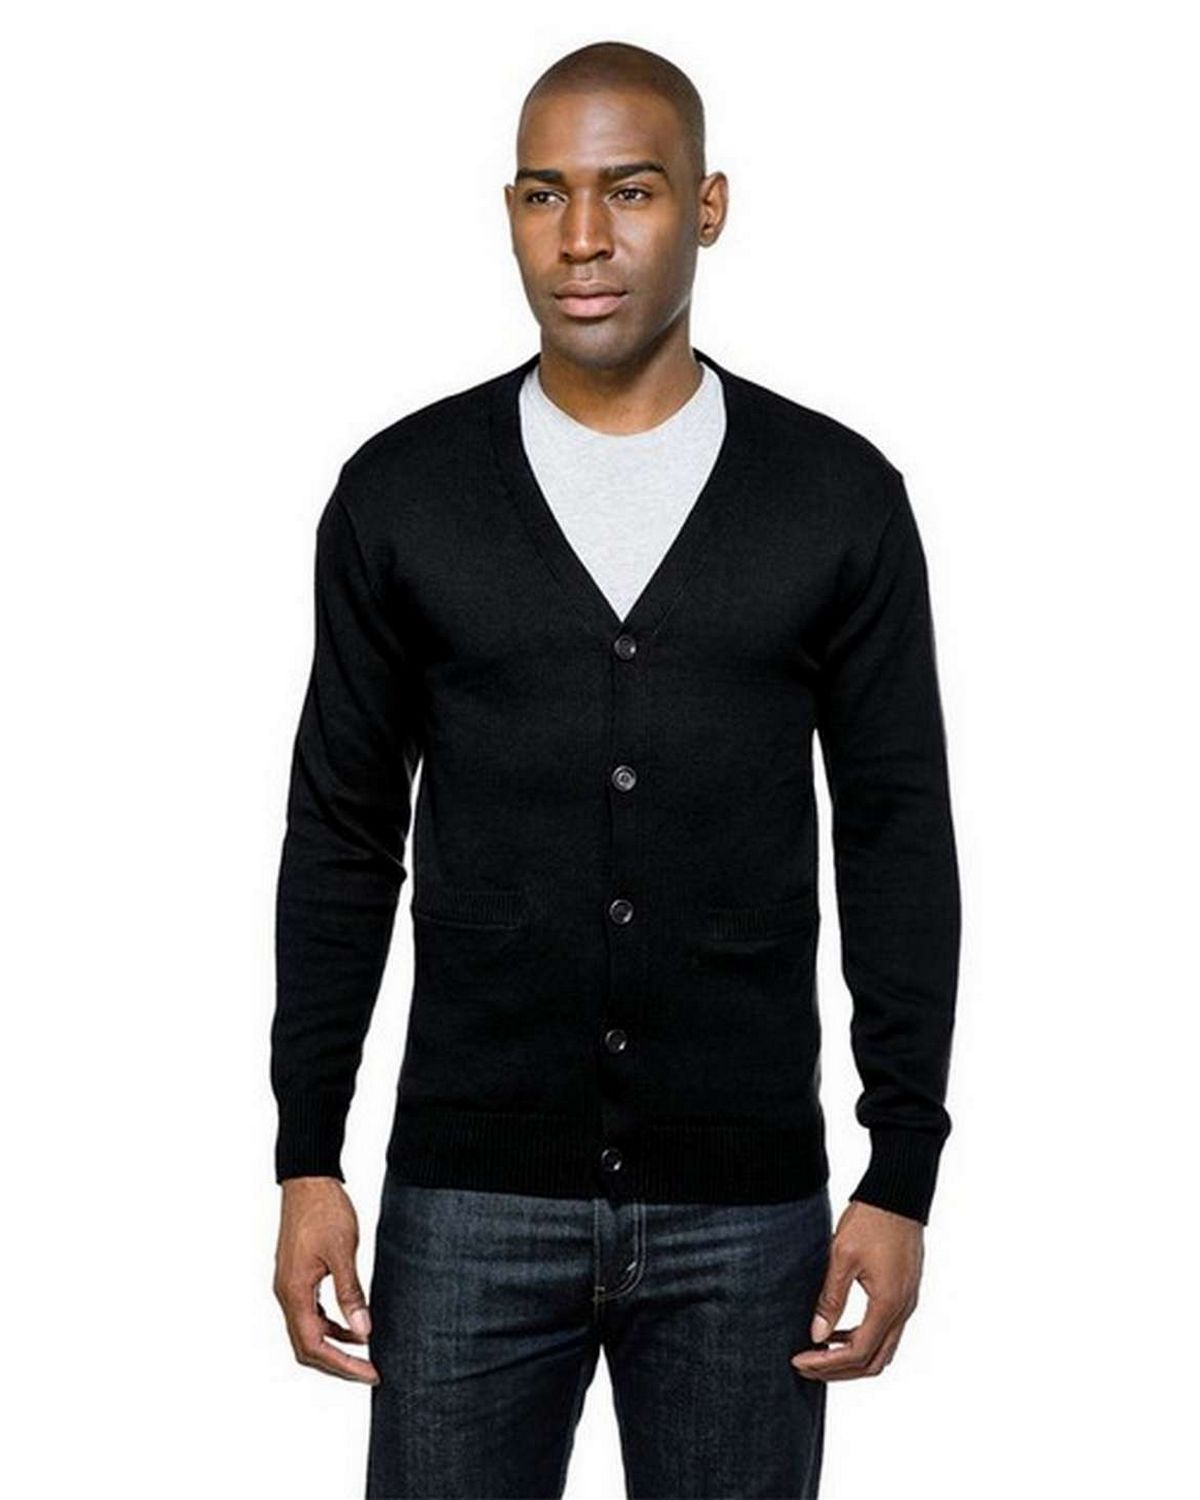 Buy Tri-Mountain SW942 Carter 100% Cotton Medium Gauge Cardigan Sweater